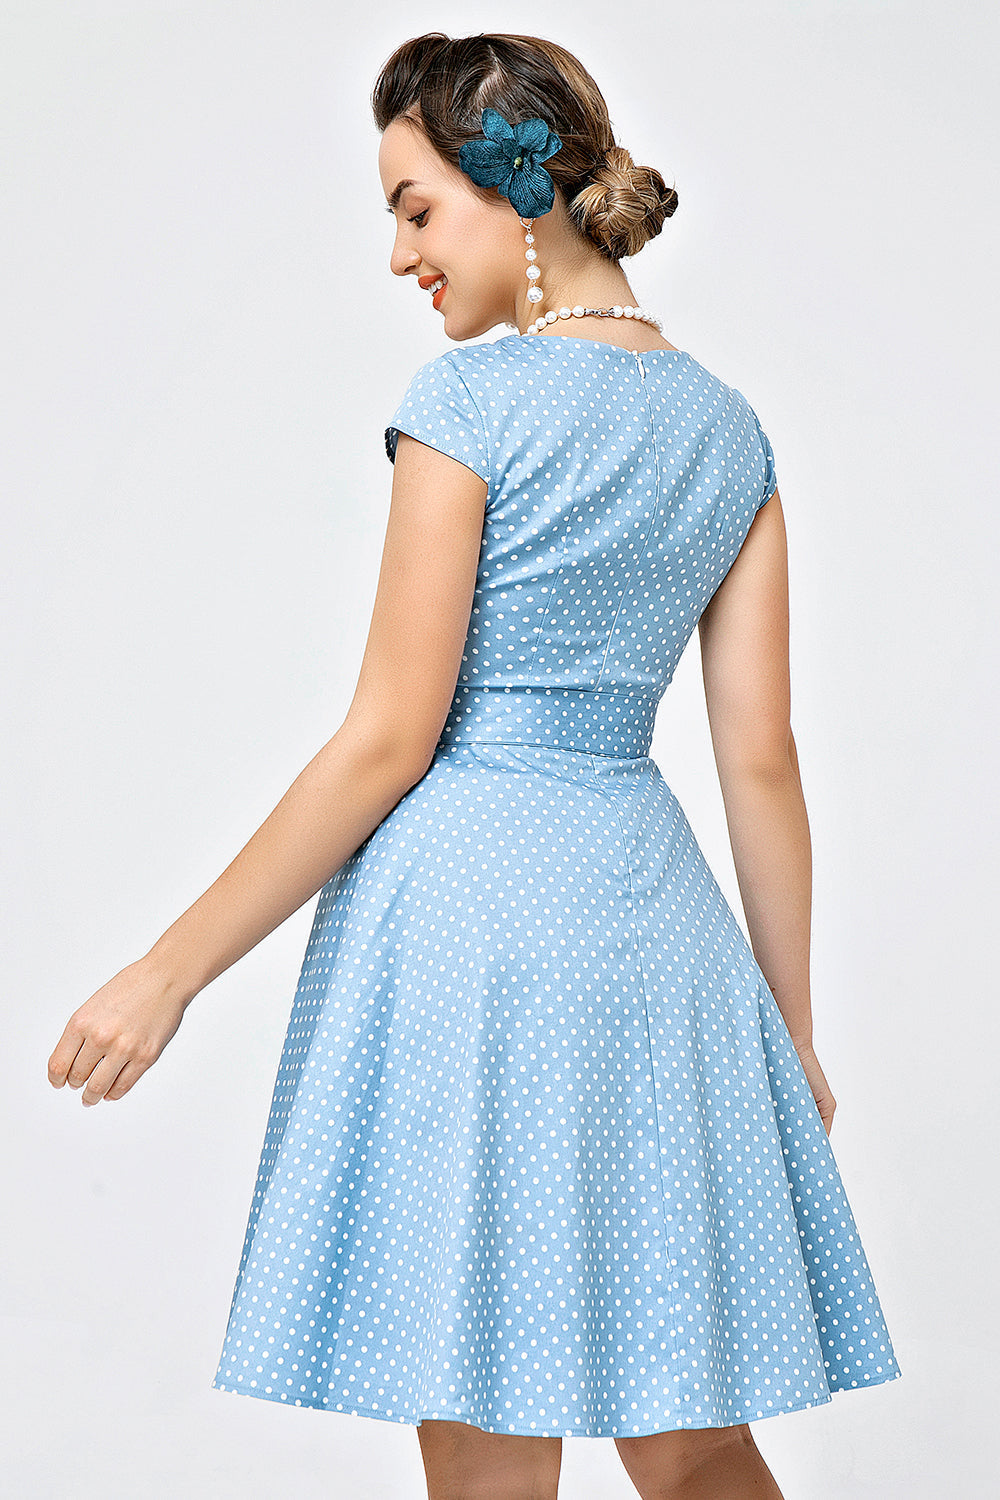 Print Foral 1950s Swing Dress